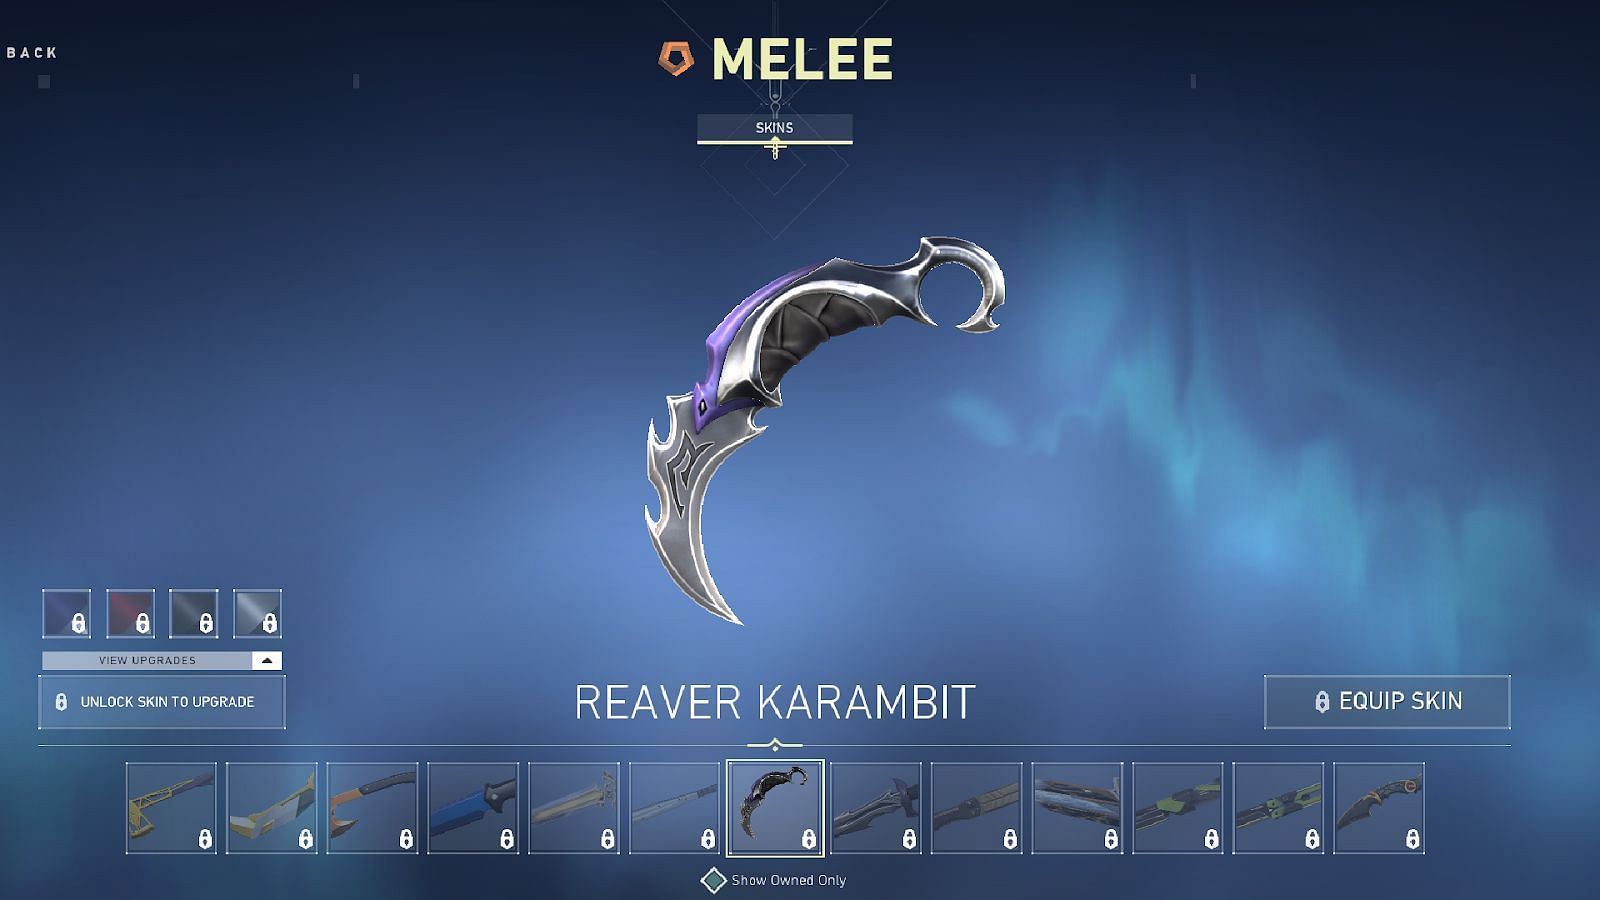 Reaver 2.0 Karambit (Image via Riot Games)